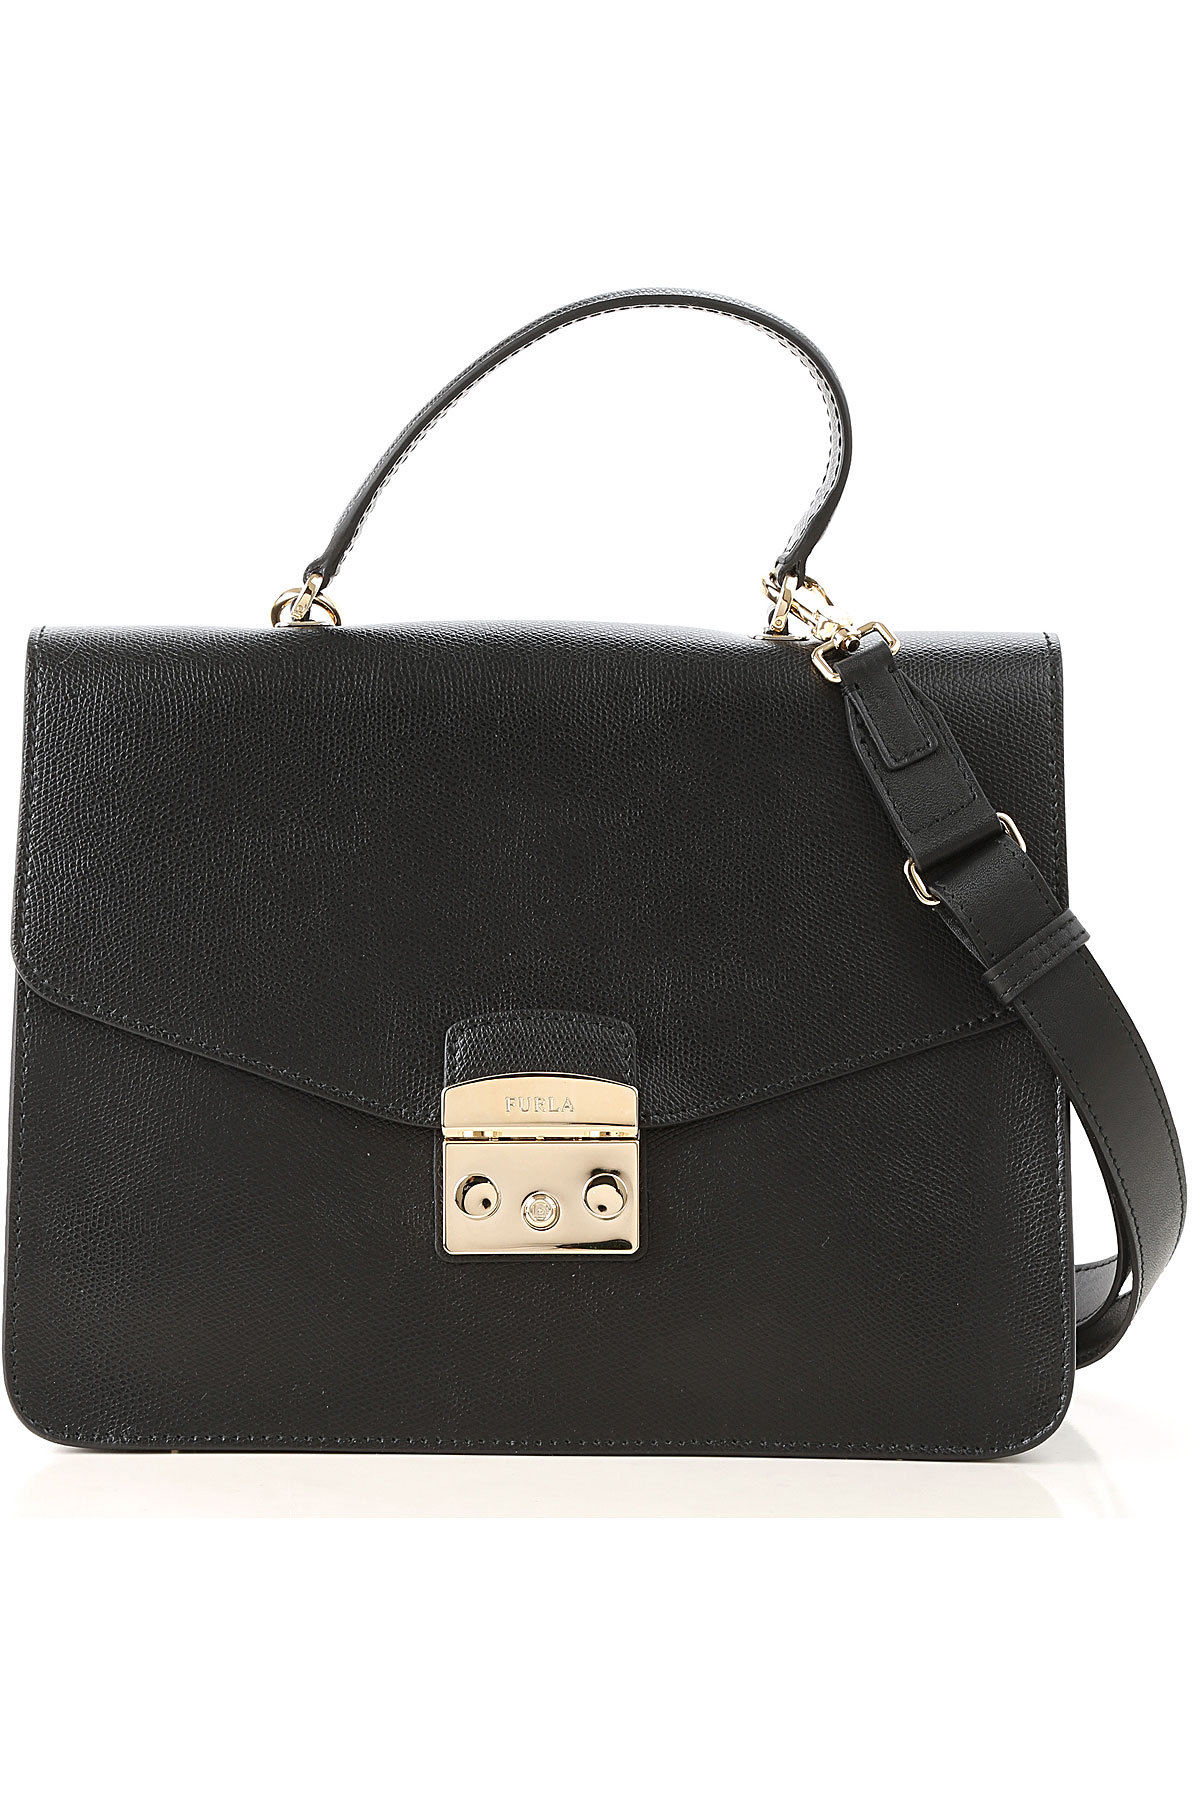 Handbags Furla, Style code: 962777-onyx-